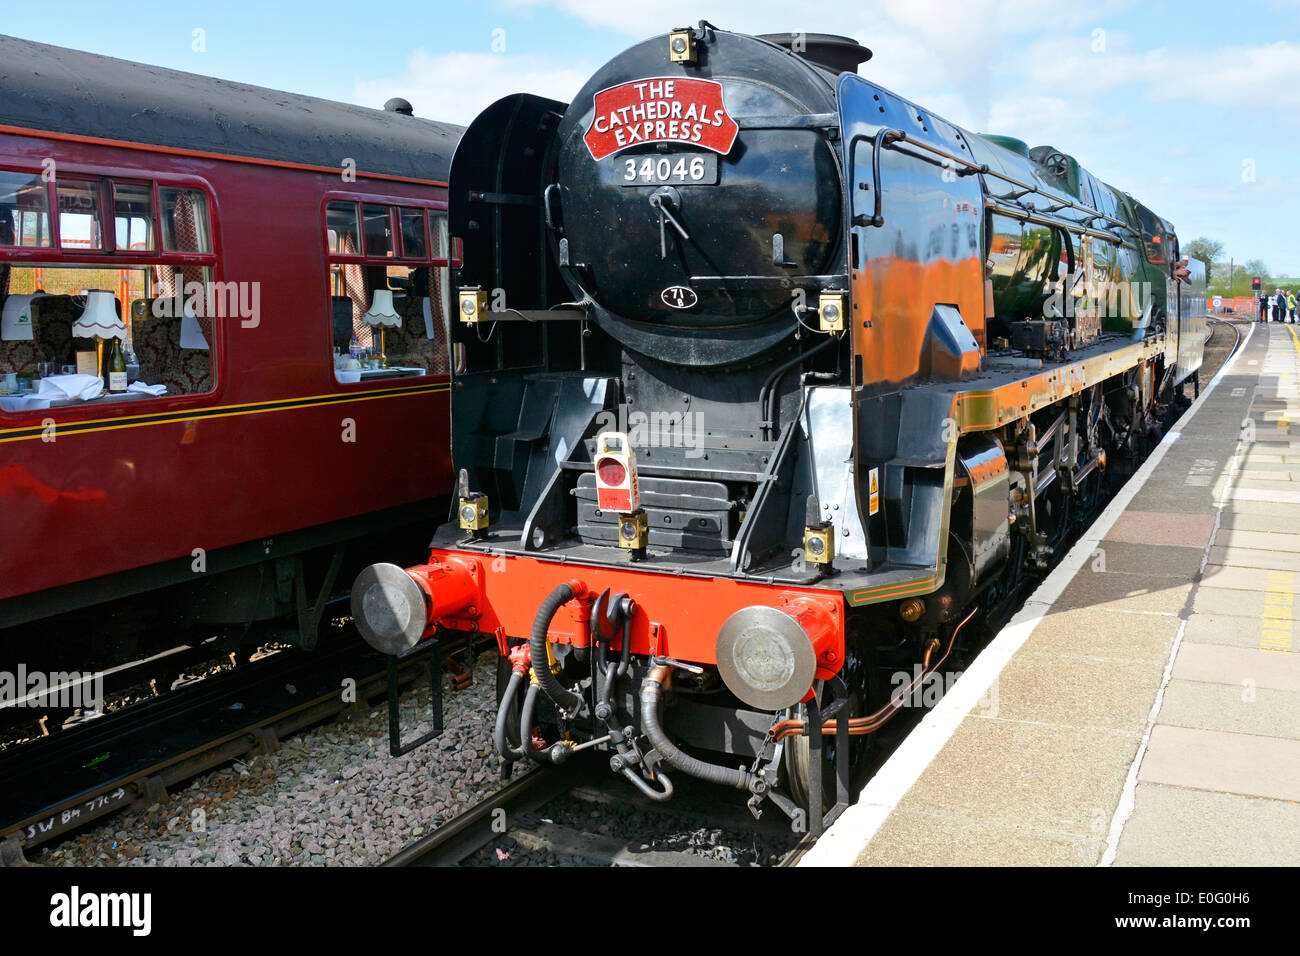 Preserved steam engine 34046 Braunton runs round its carriages at Stratford upon Avon railway station Stock Photo